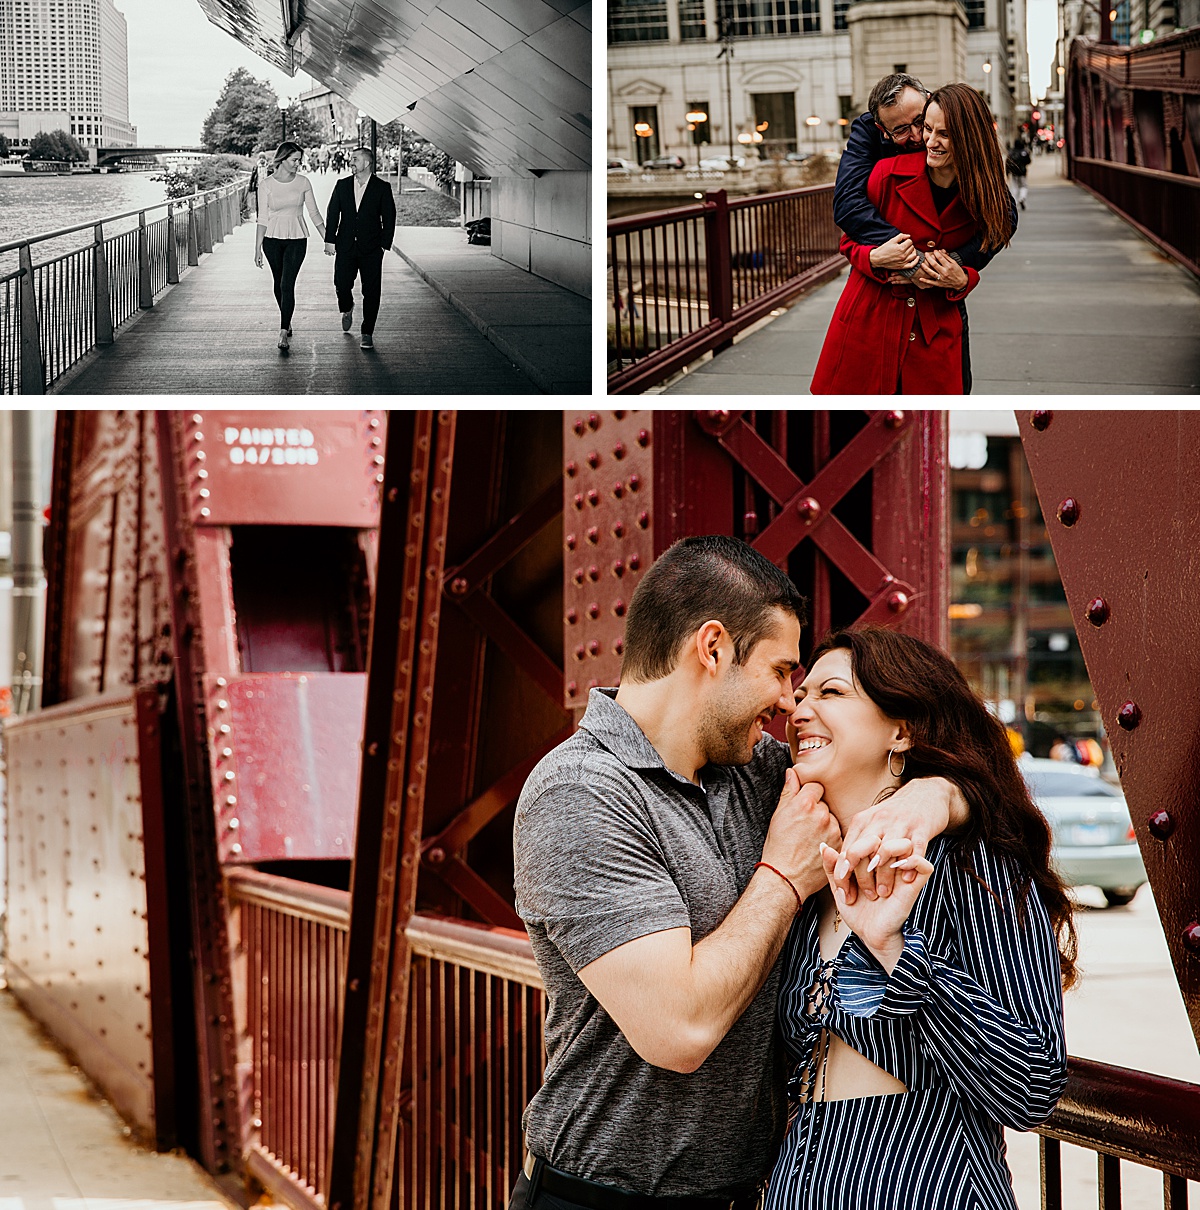 river walk, river walk chicago, chicago river walk, engagement photos, chicago engagement locations, couples engagement photos,